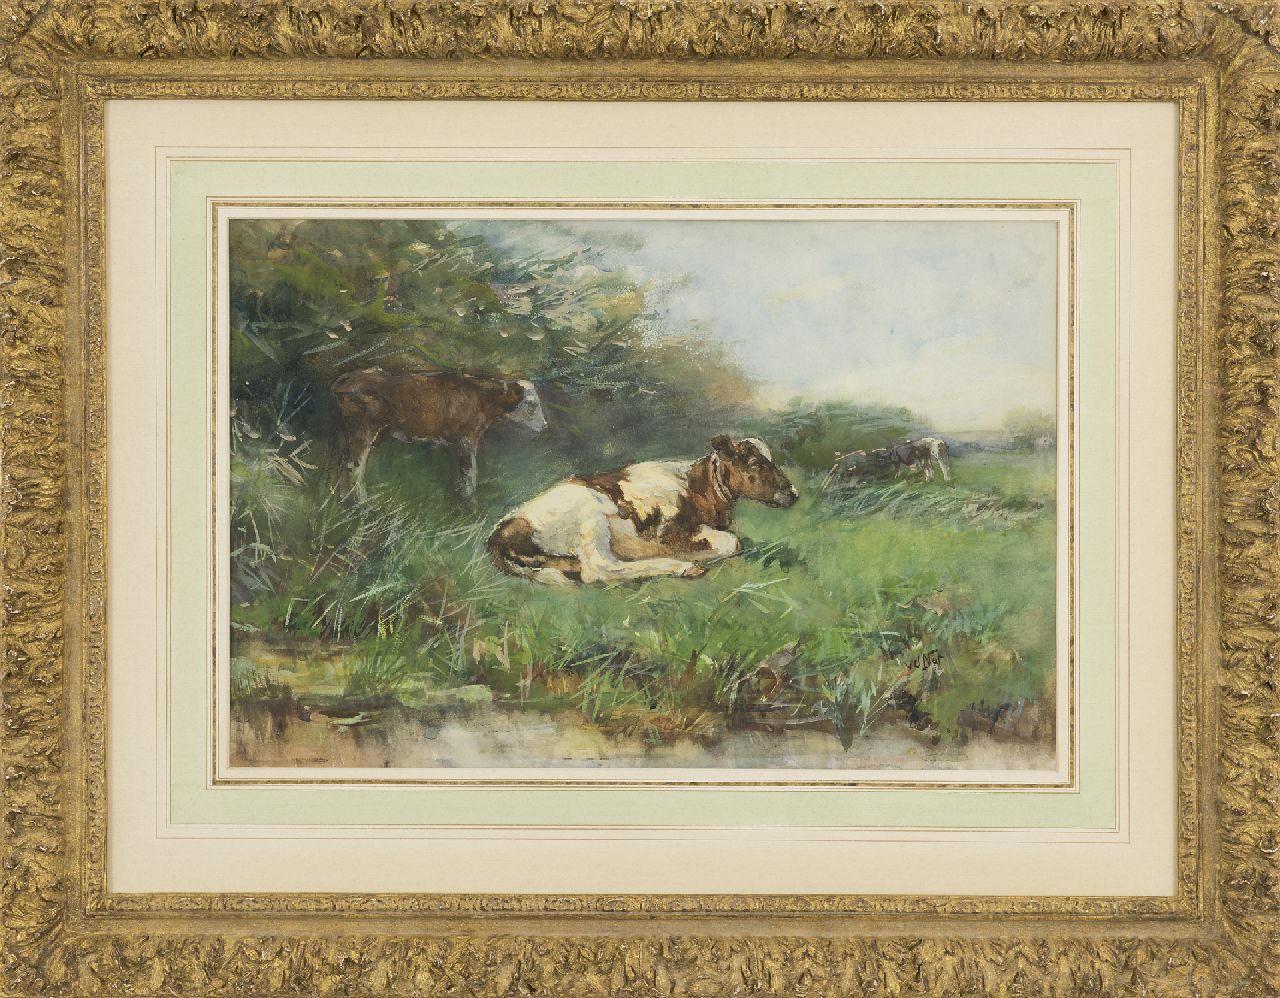 Nat W.H. van der | 'Willem' Hendrik van der Nat, Calfs in a pasture, watercolour on paper 33.3 x 49.6 cm, signed l.r.